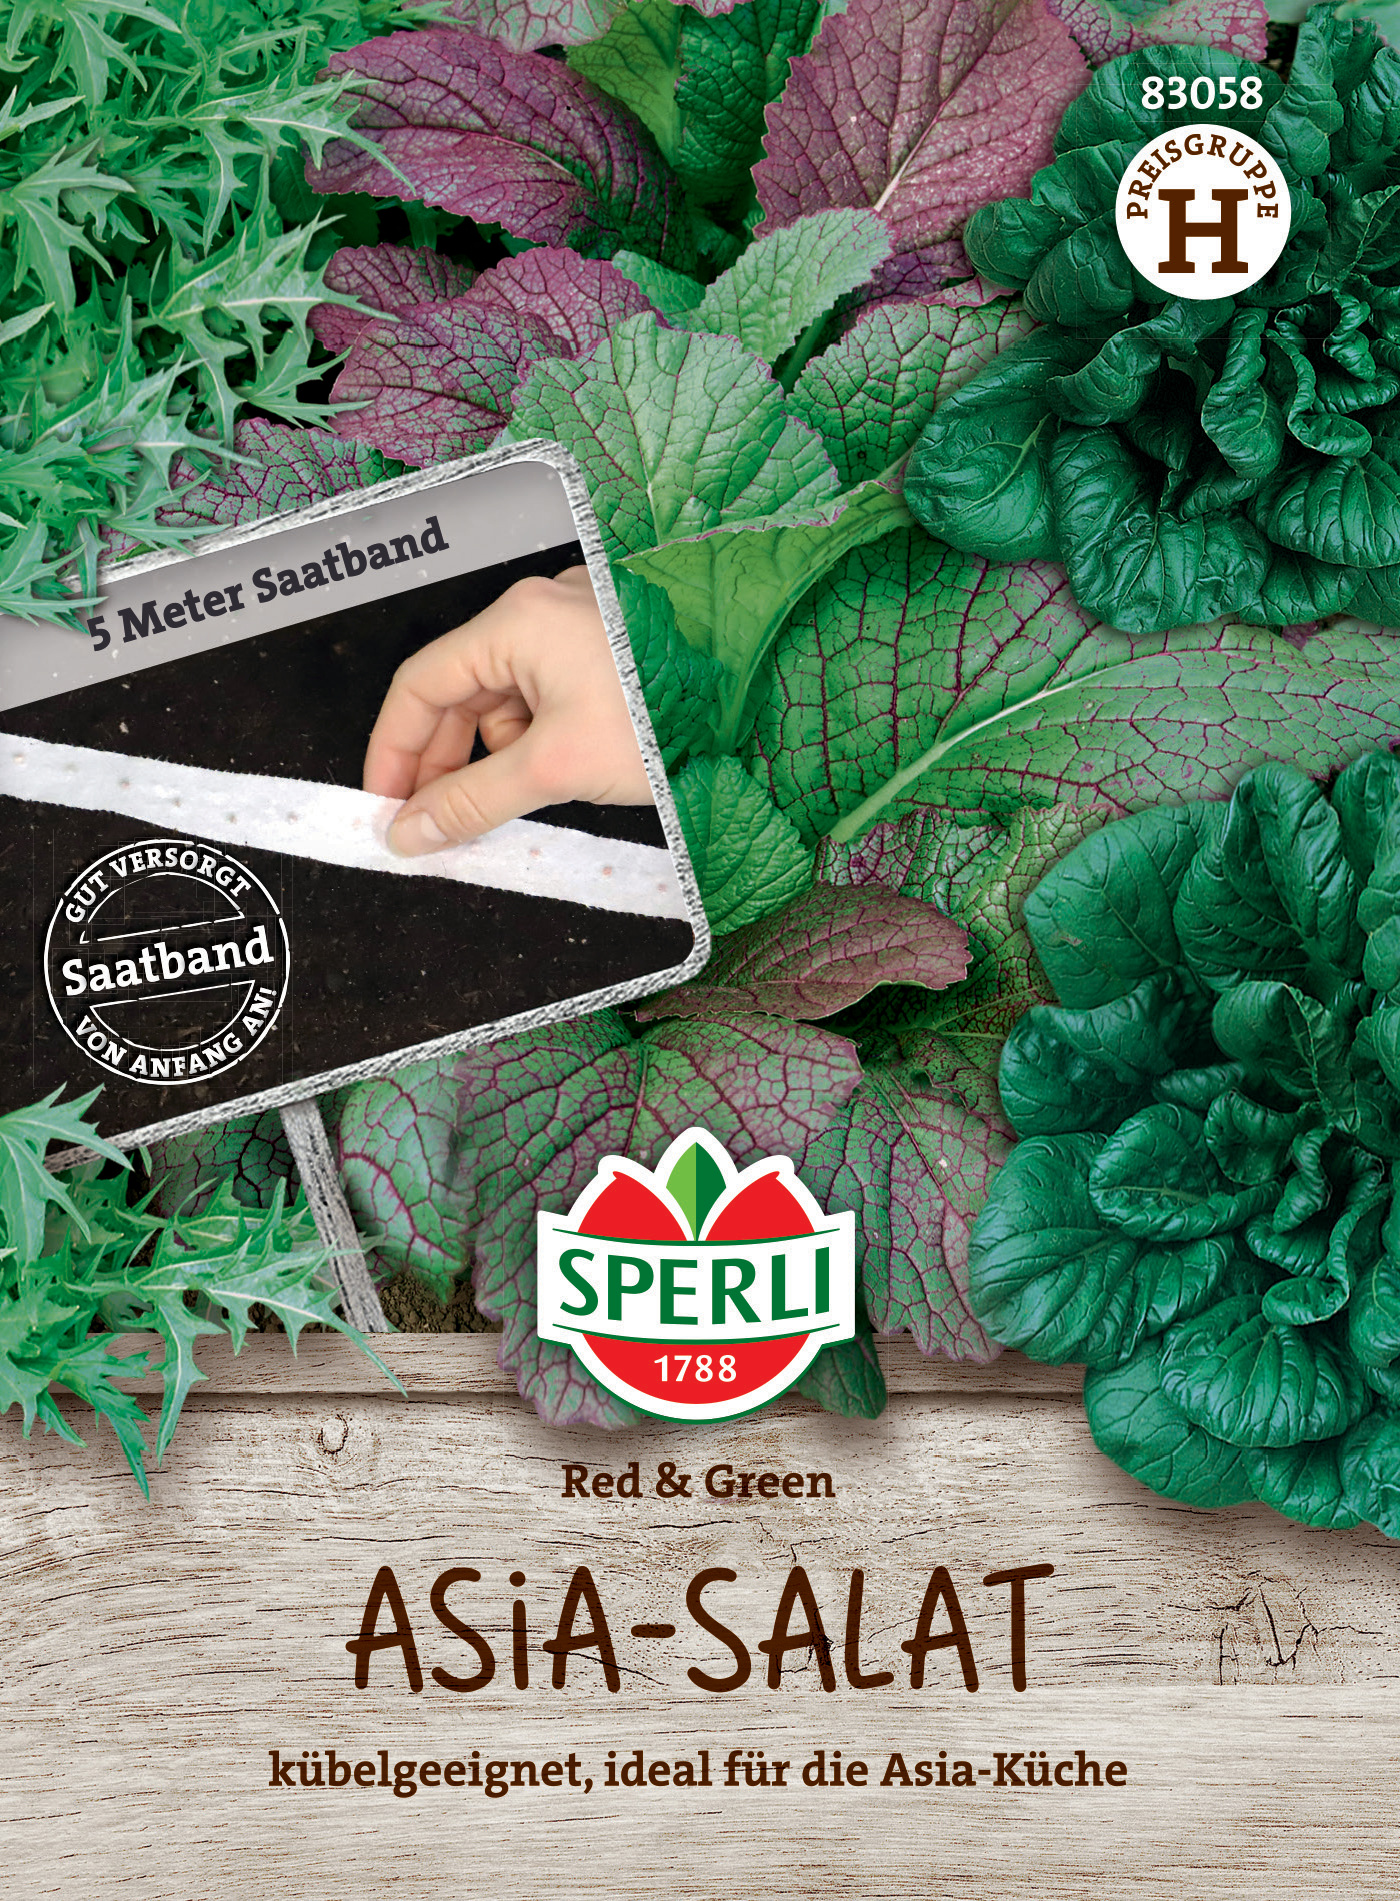 Asia-Salat Red & Green, Saatband